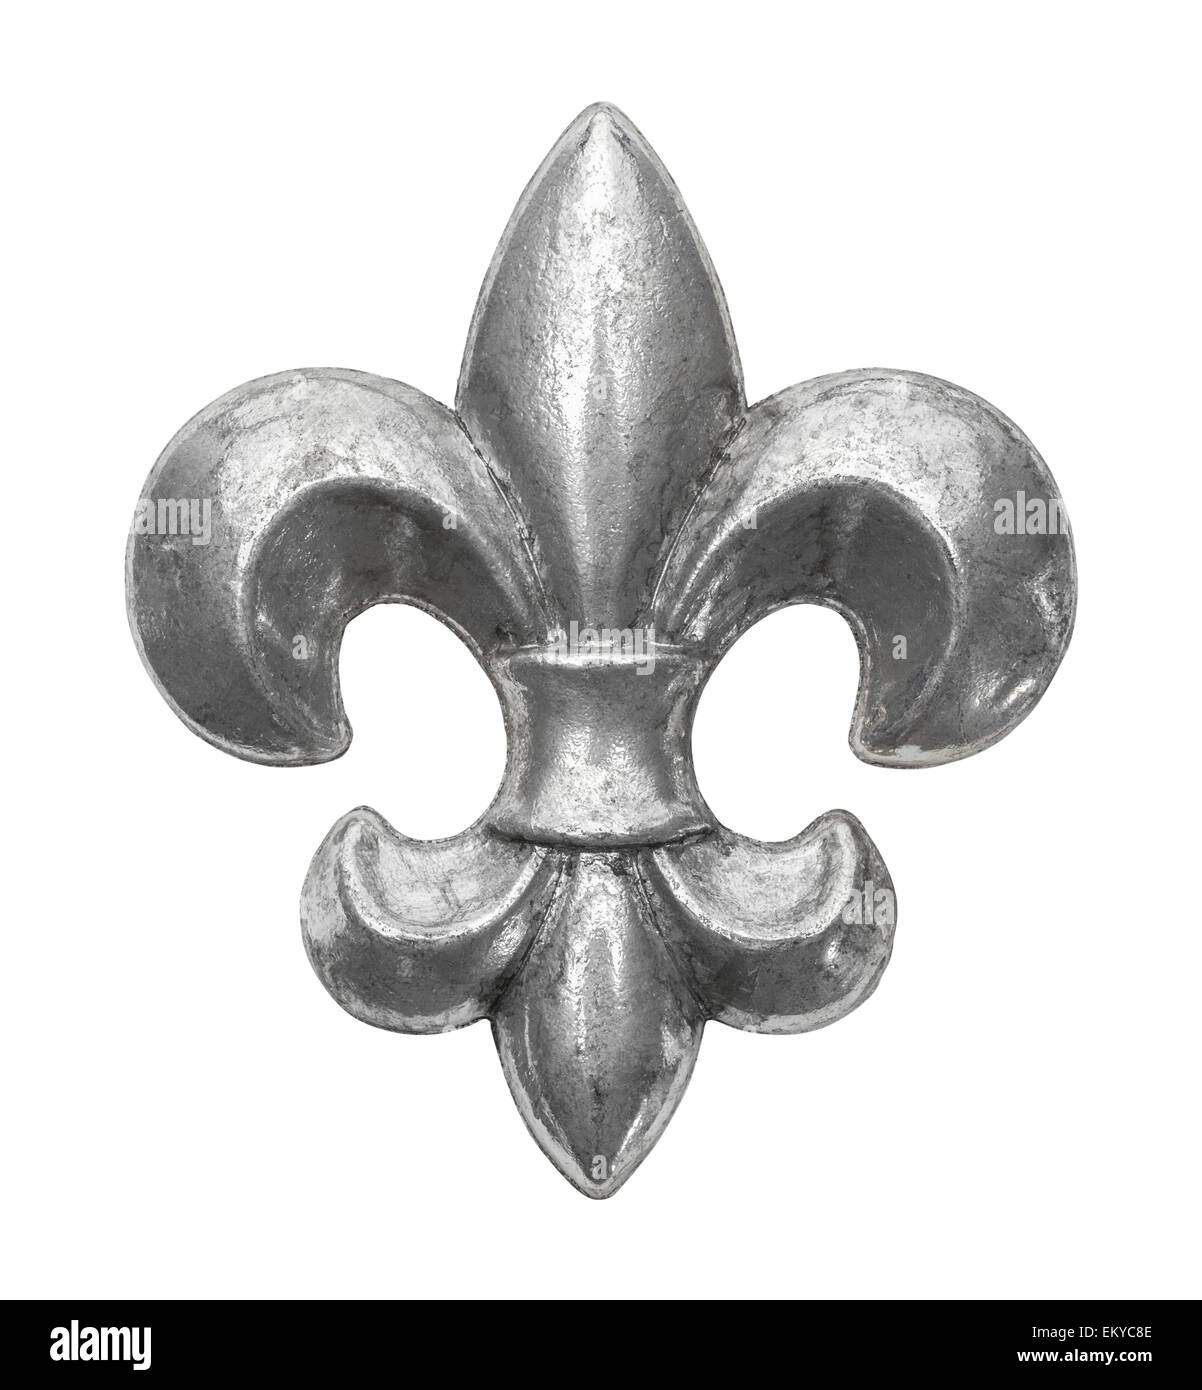 Decorative Metal French Royal Symbol Isolated on White Background. Stock Photo